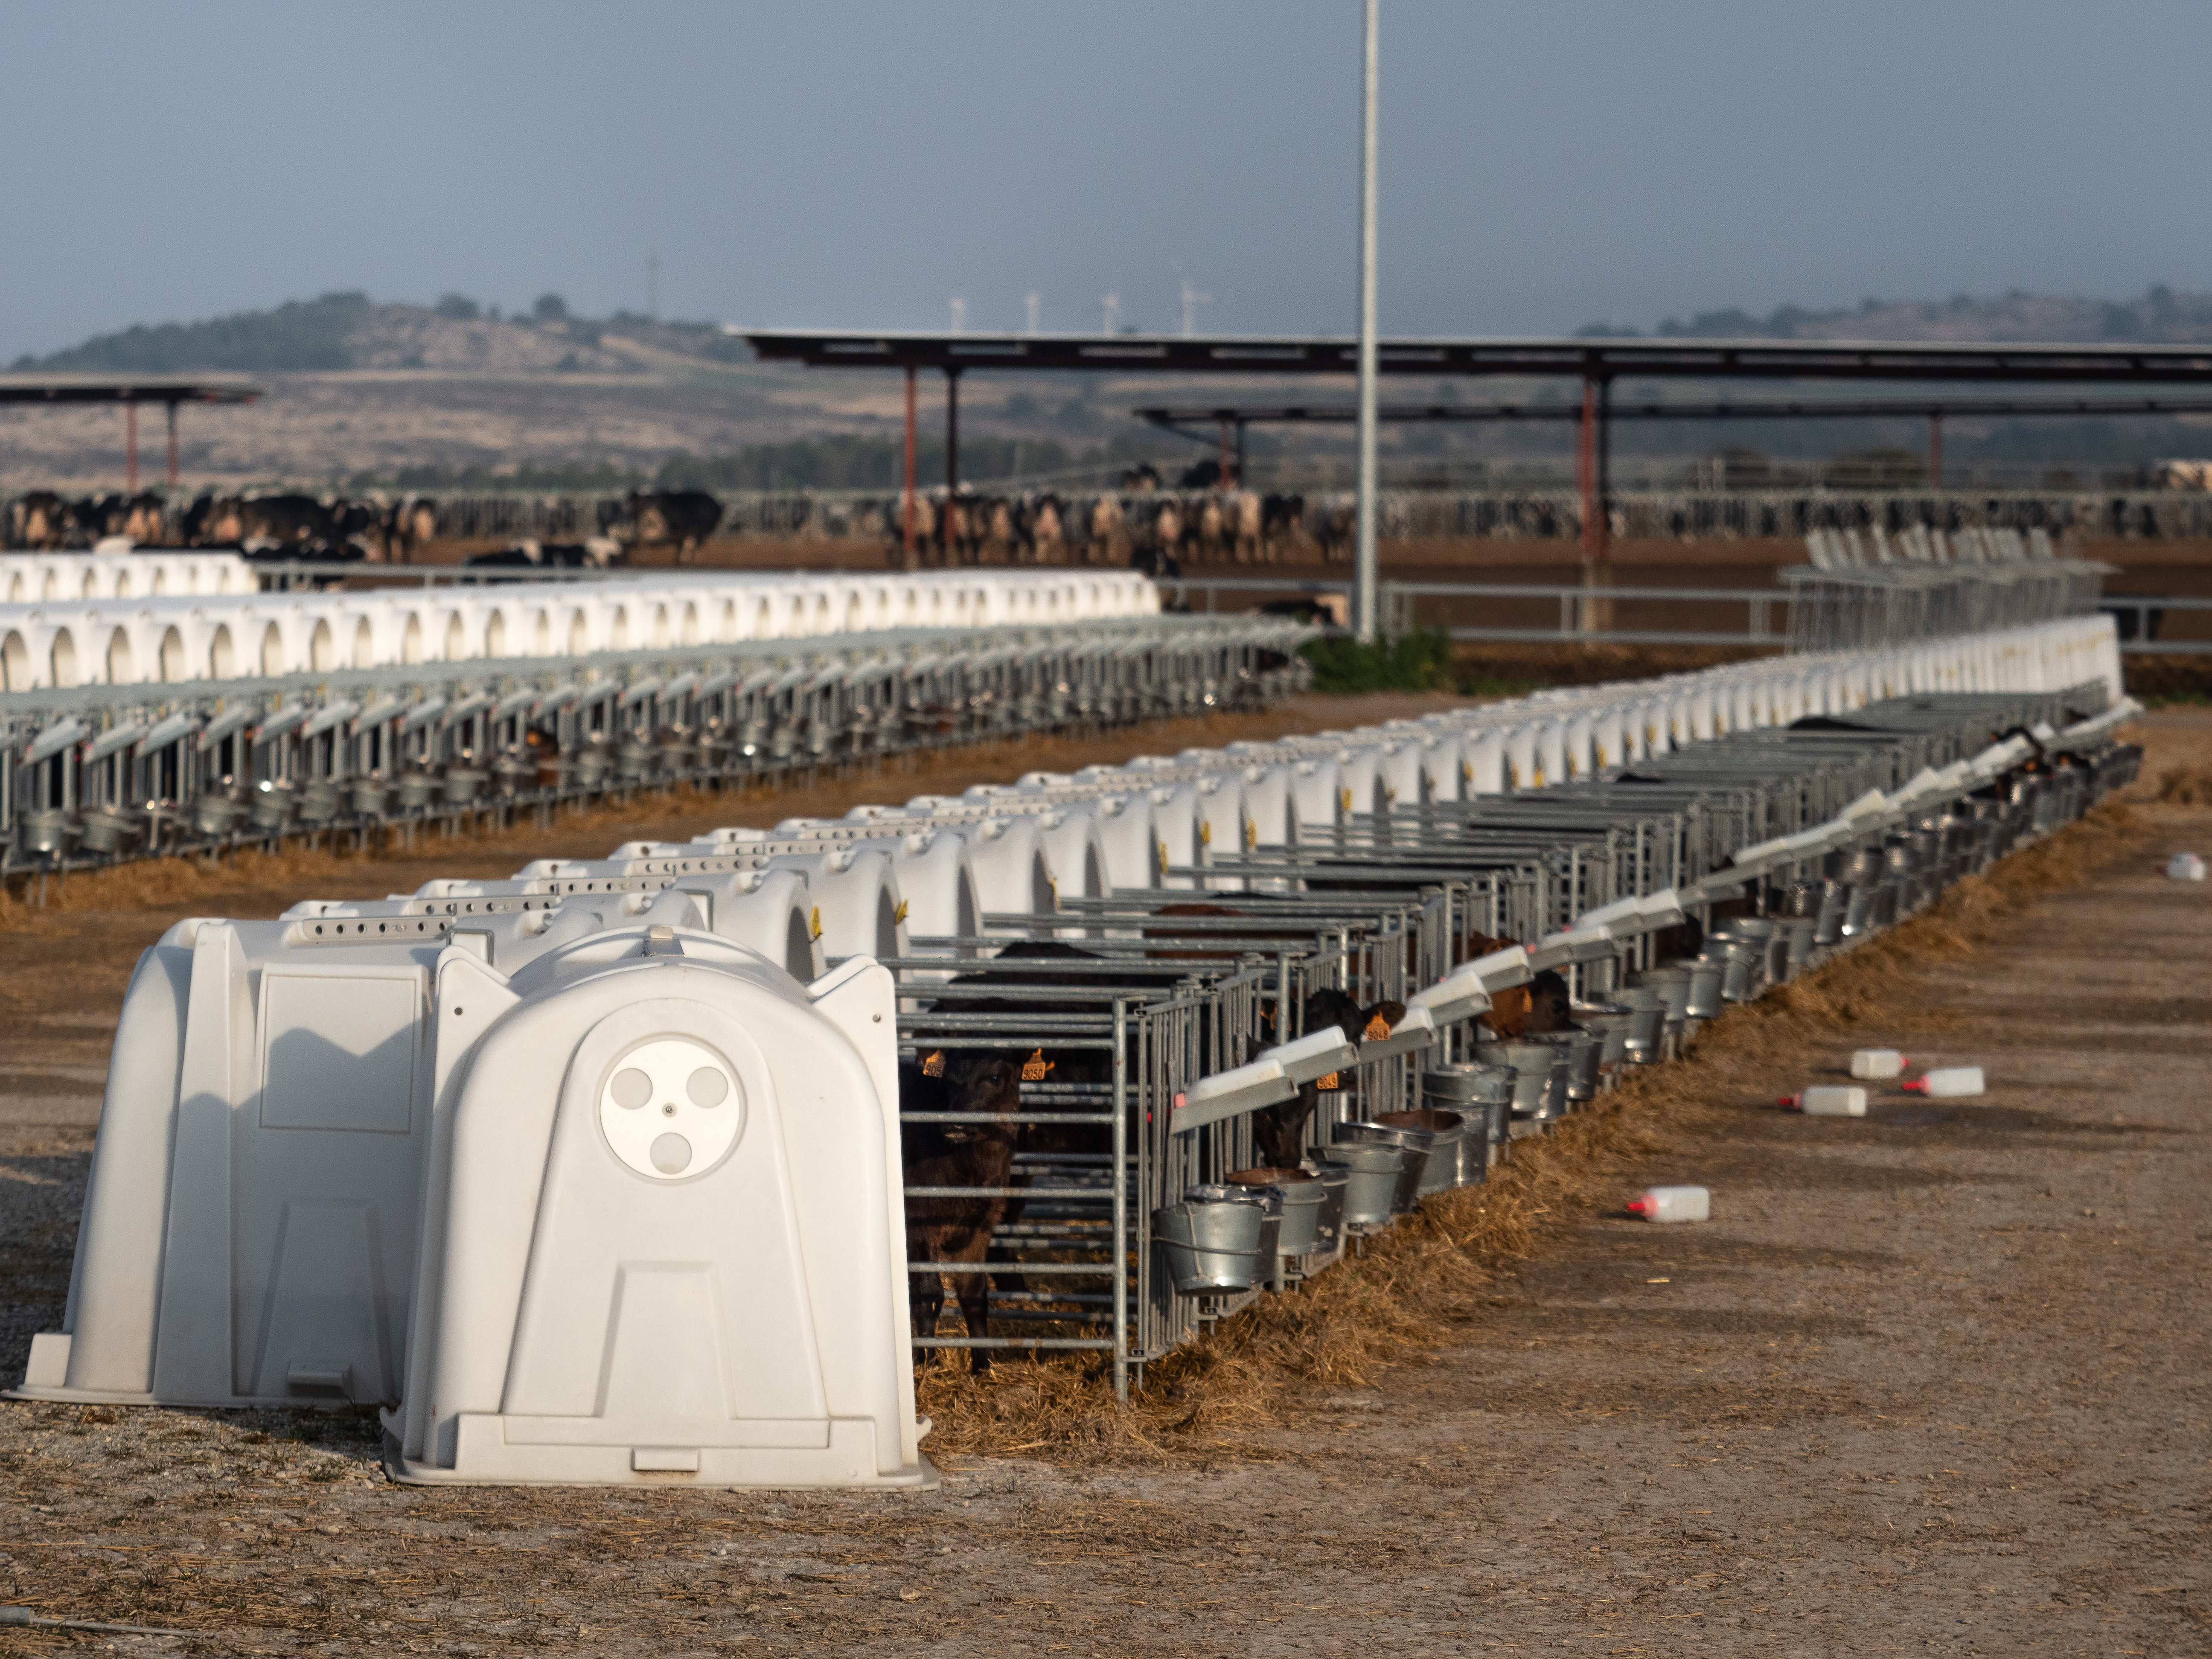 The dairy factory farm near the town of Caparroso, Spain © Greenpeace / Wildlight